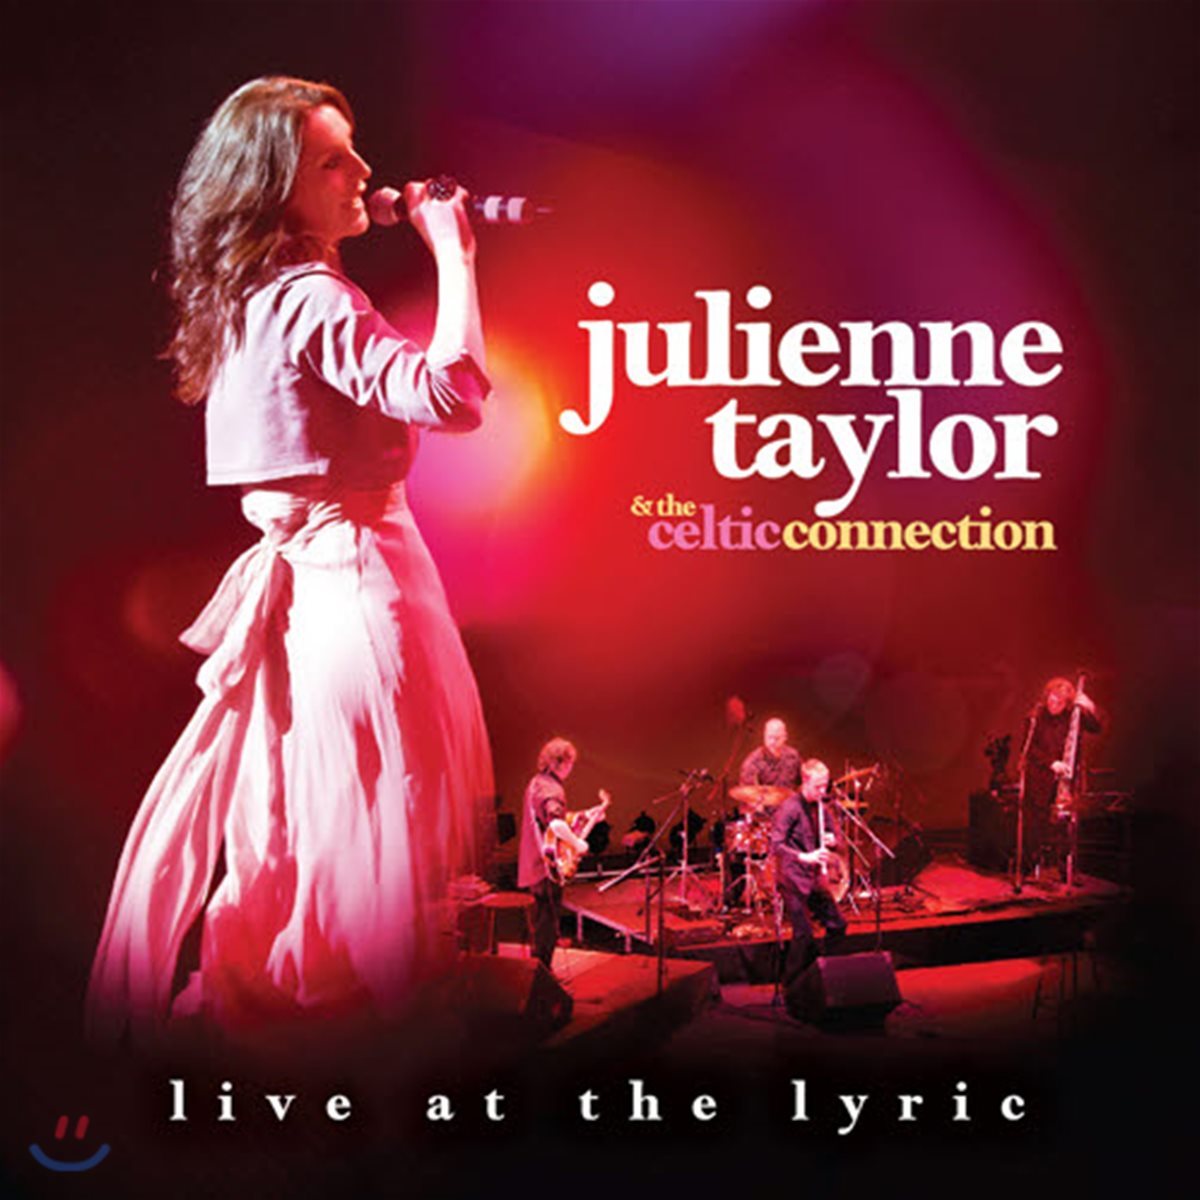 Julienne Taylor & The Celtic Connection - Live At the Lyric (줄리언 테일러 앤 더 셀틱 커넥션 - 2012년 리릭 씨어터 라이브) [HQCD]